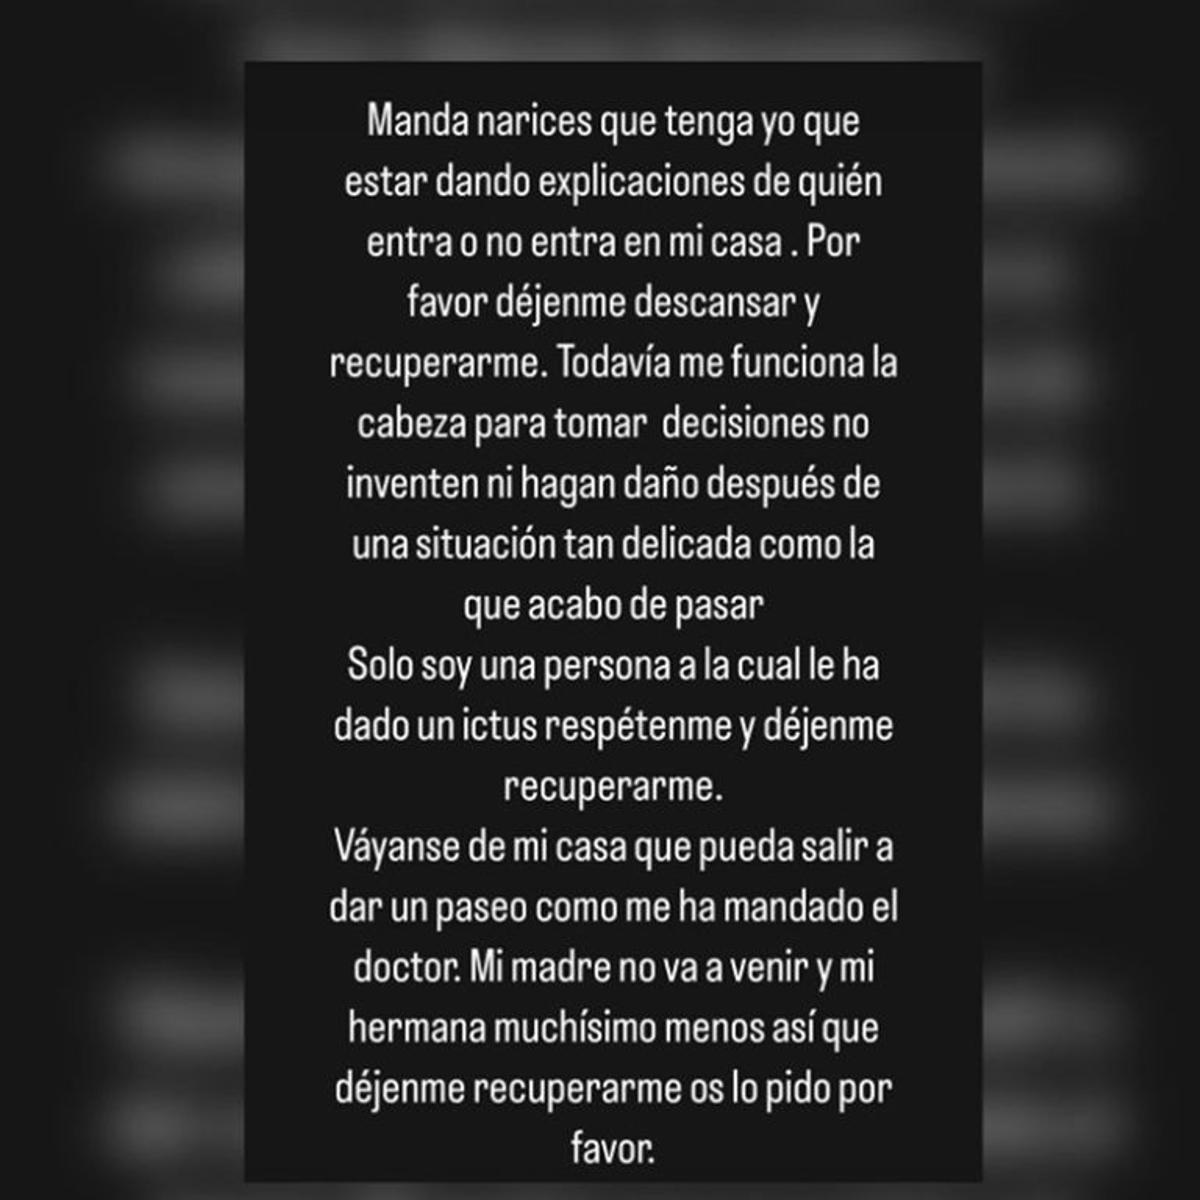 El mensaje de Kiko Rivera en Instagram.